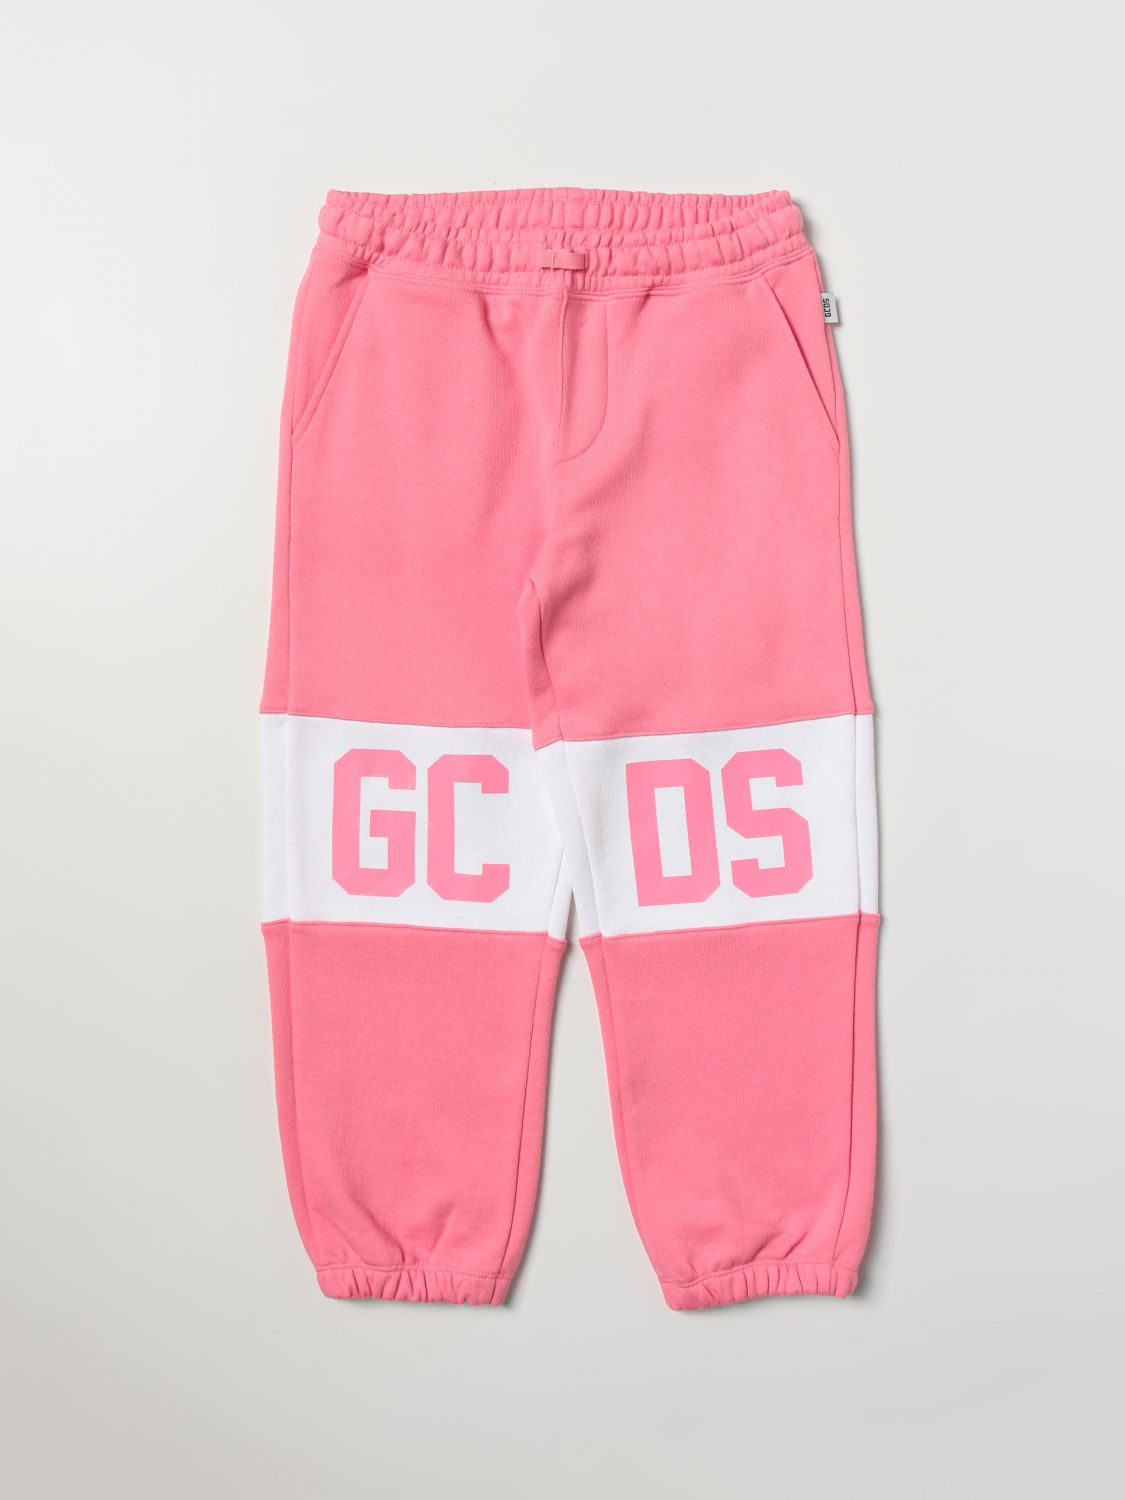 Gcds Trousers  Kids Kids Colour Pink